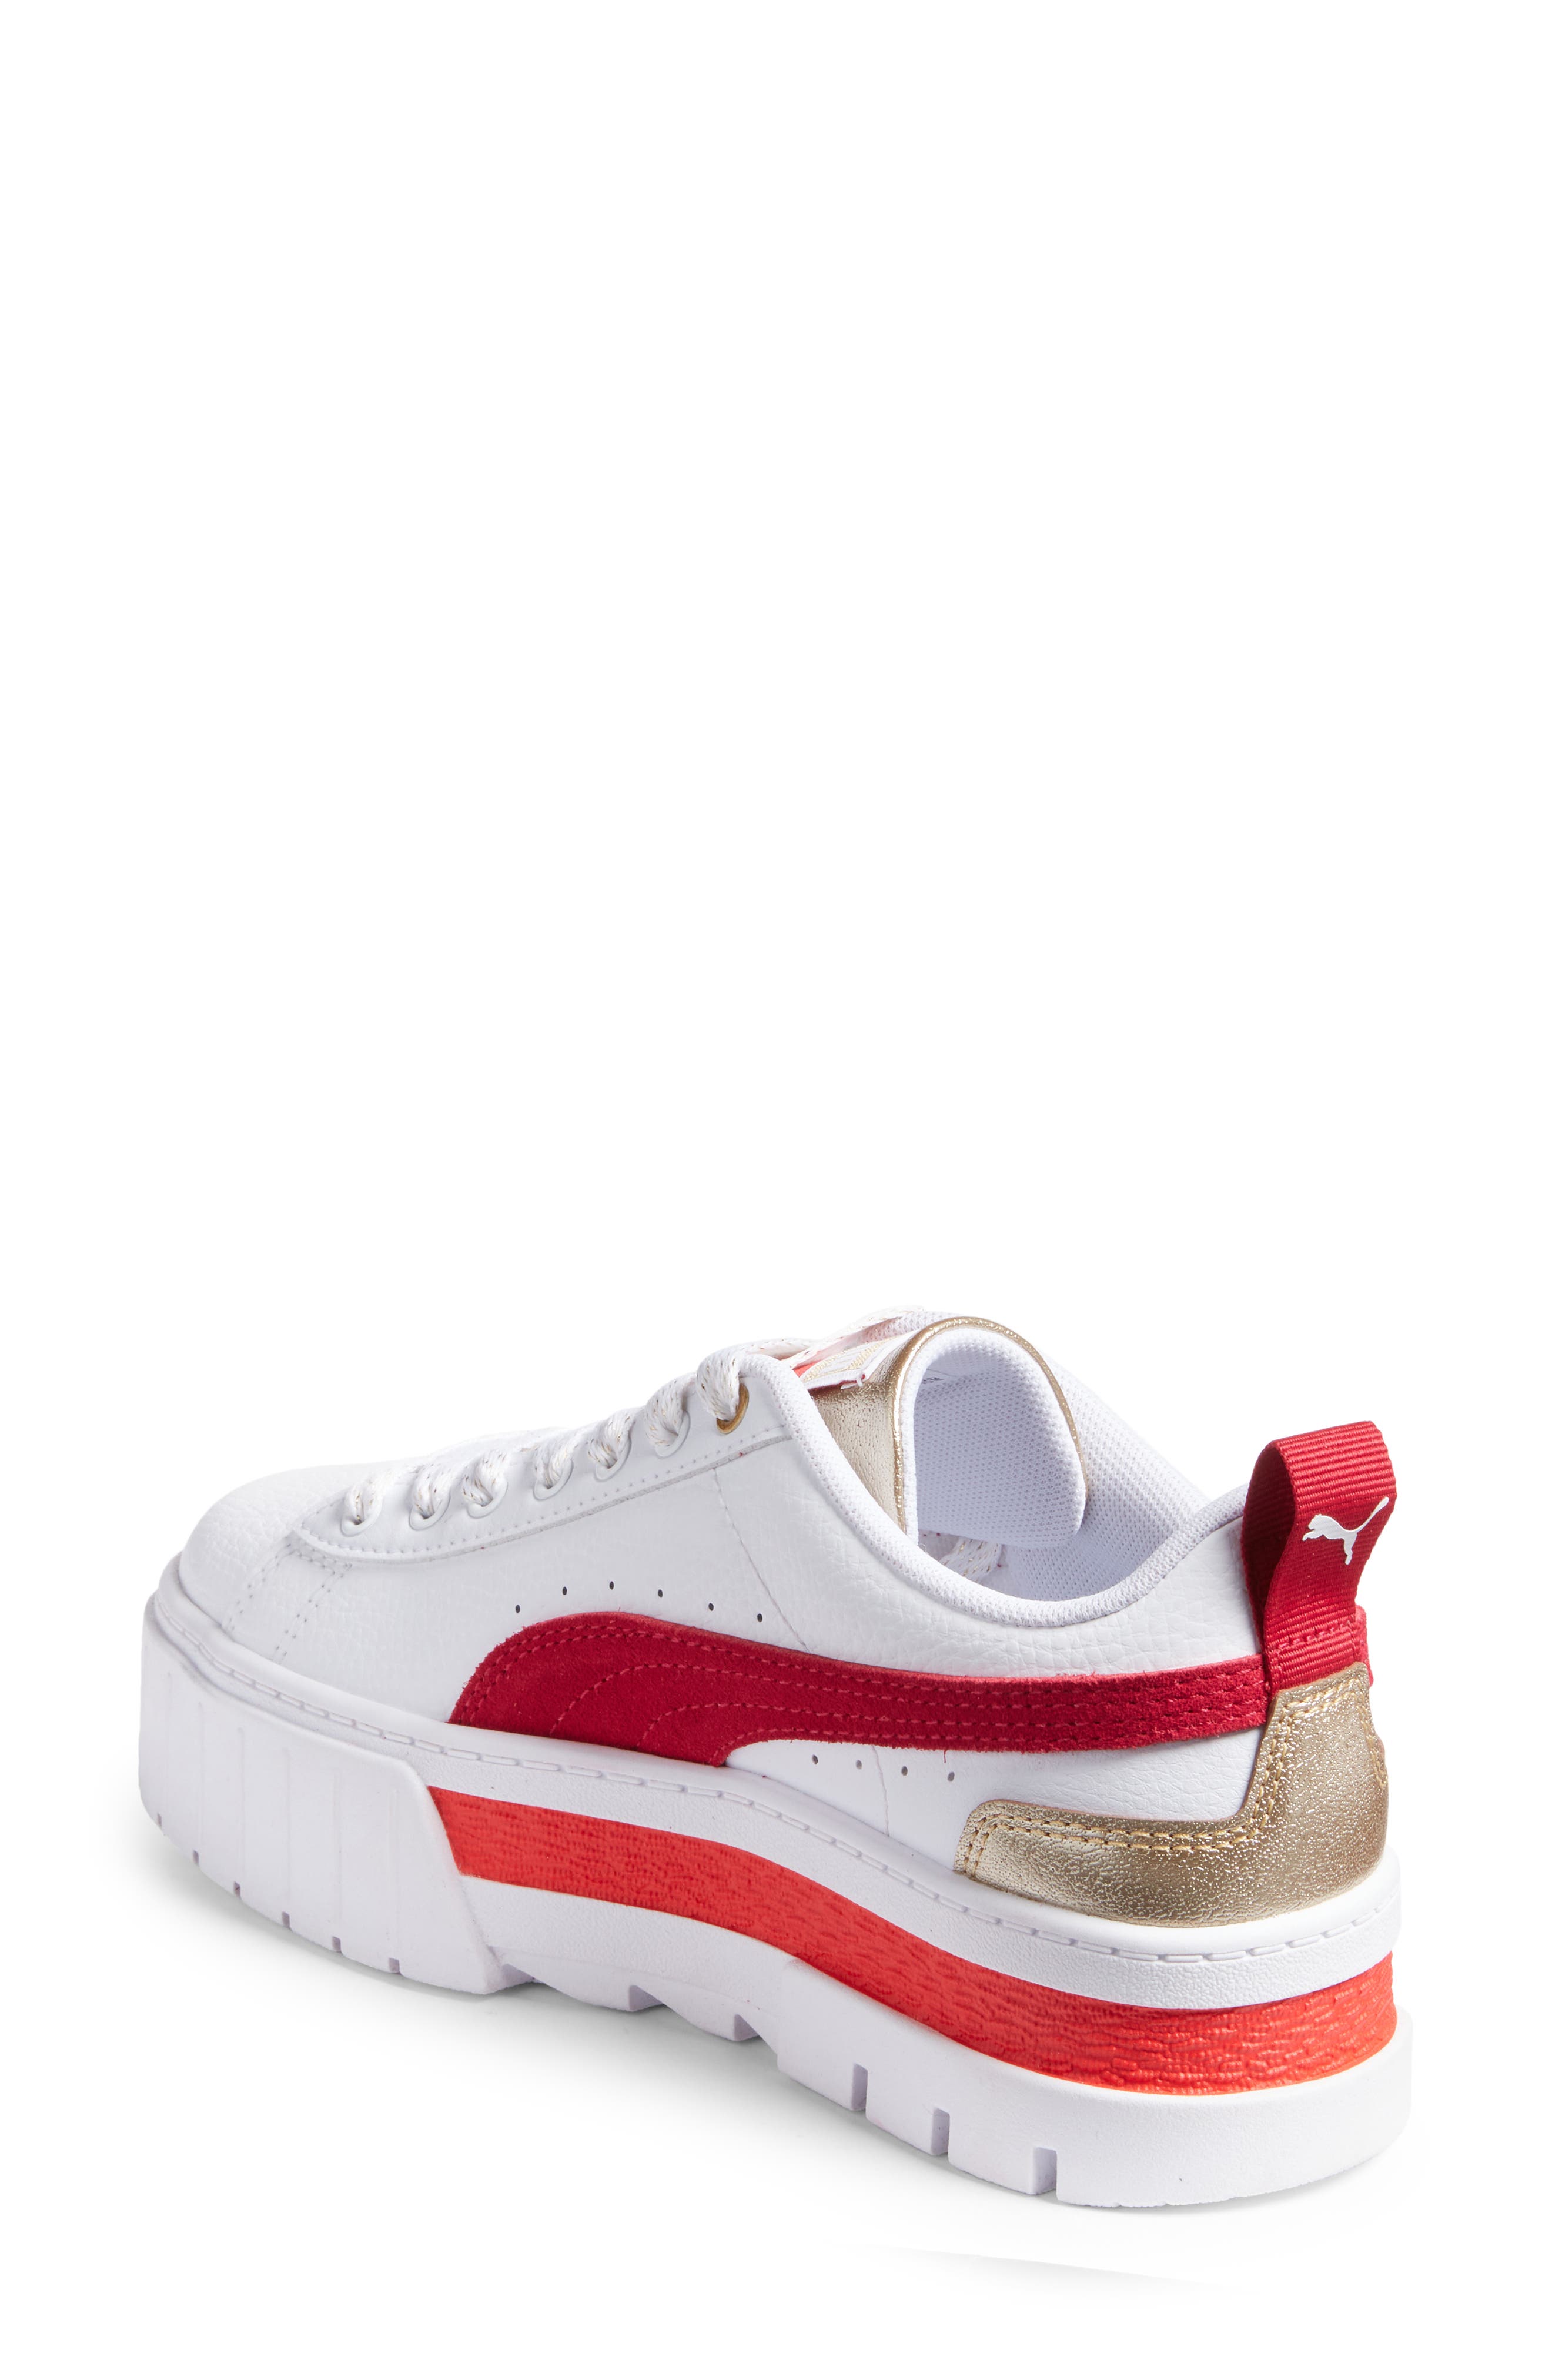 puma platform sneakers red